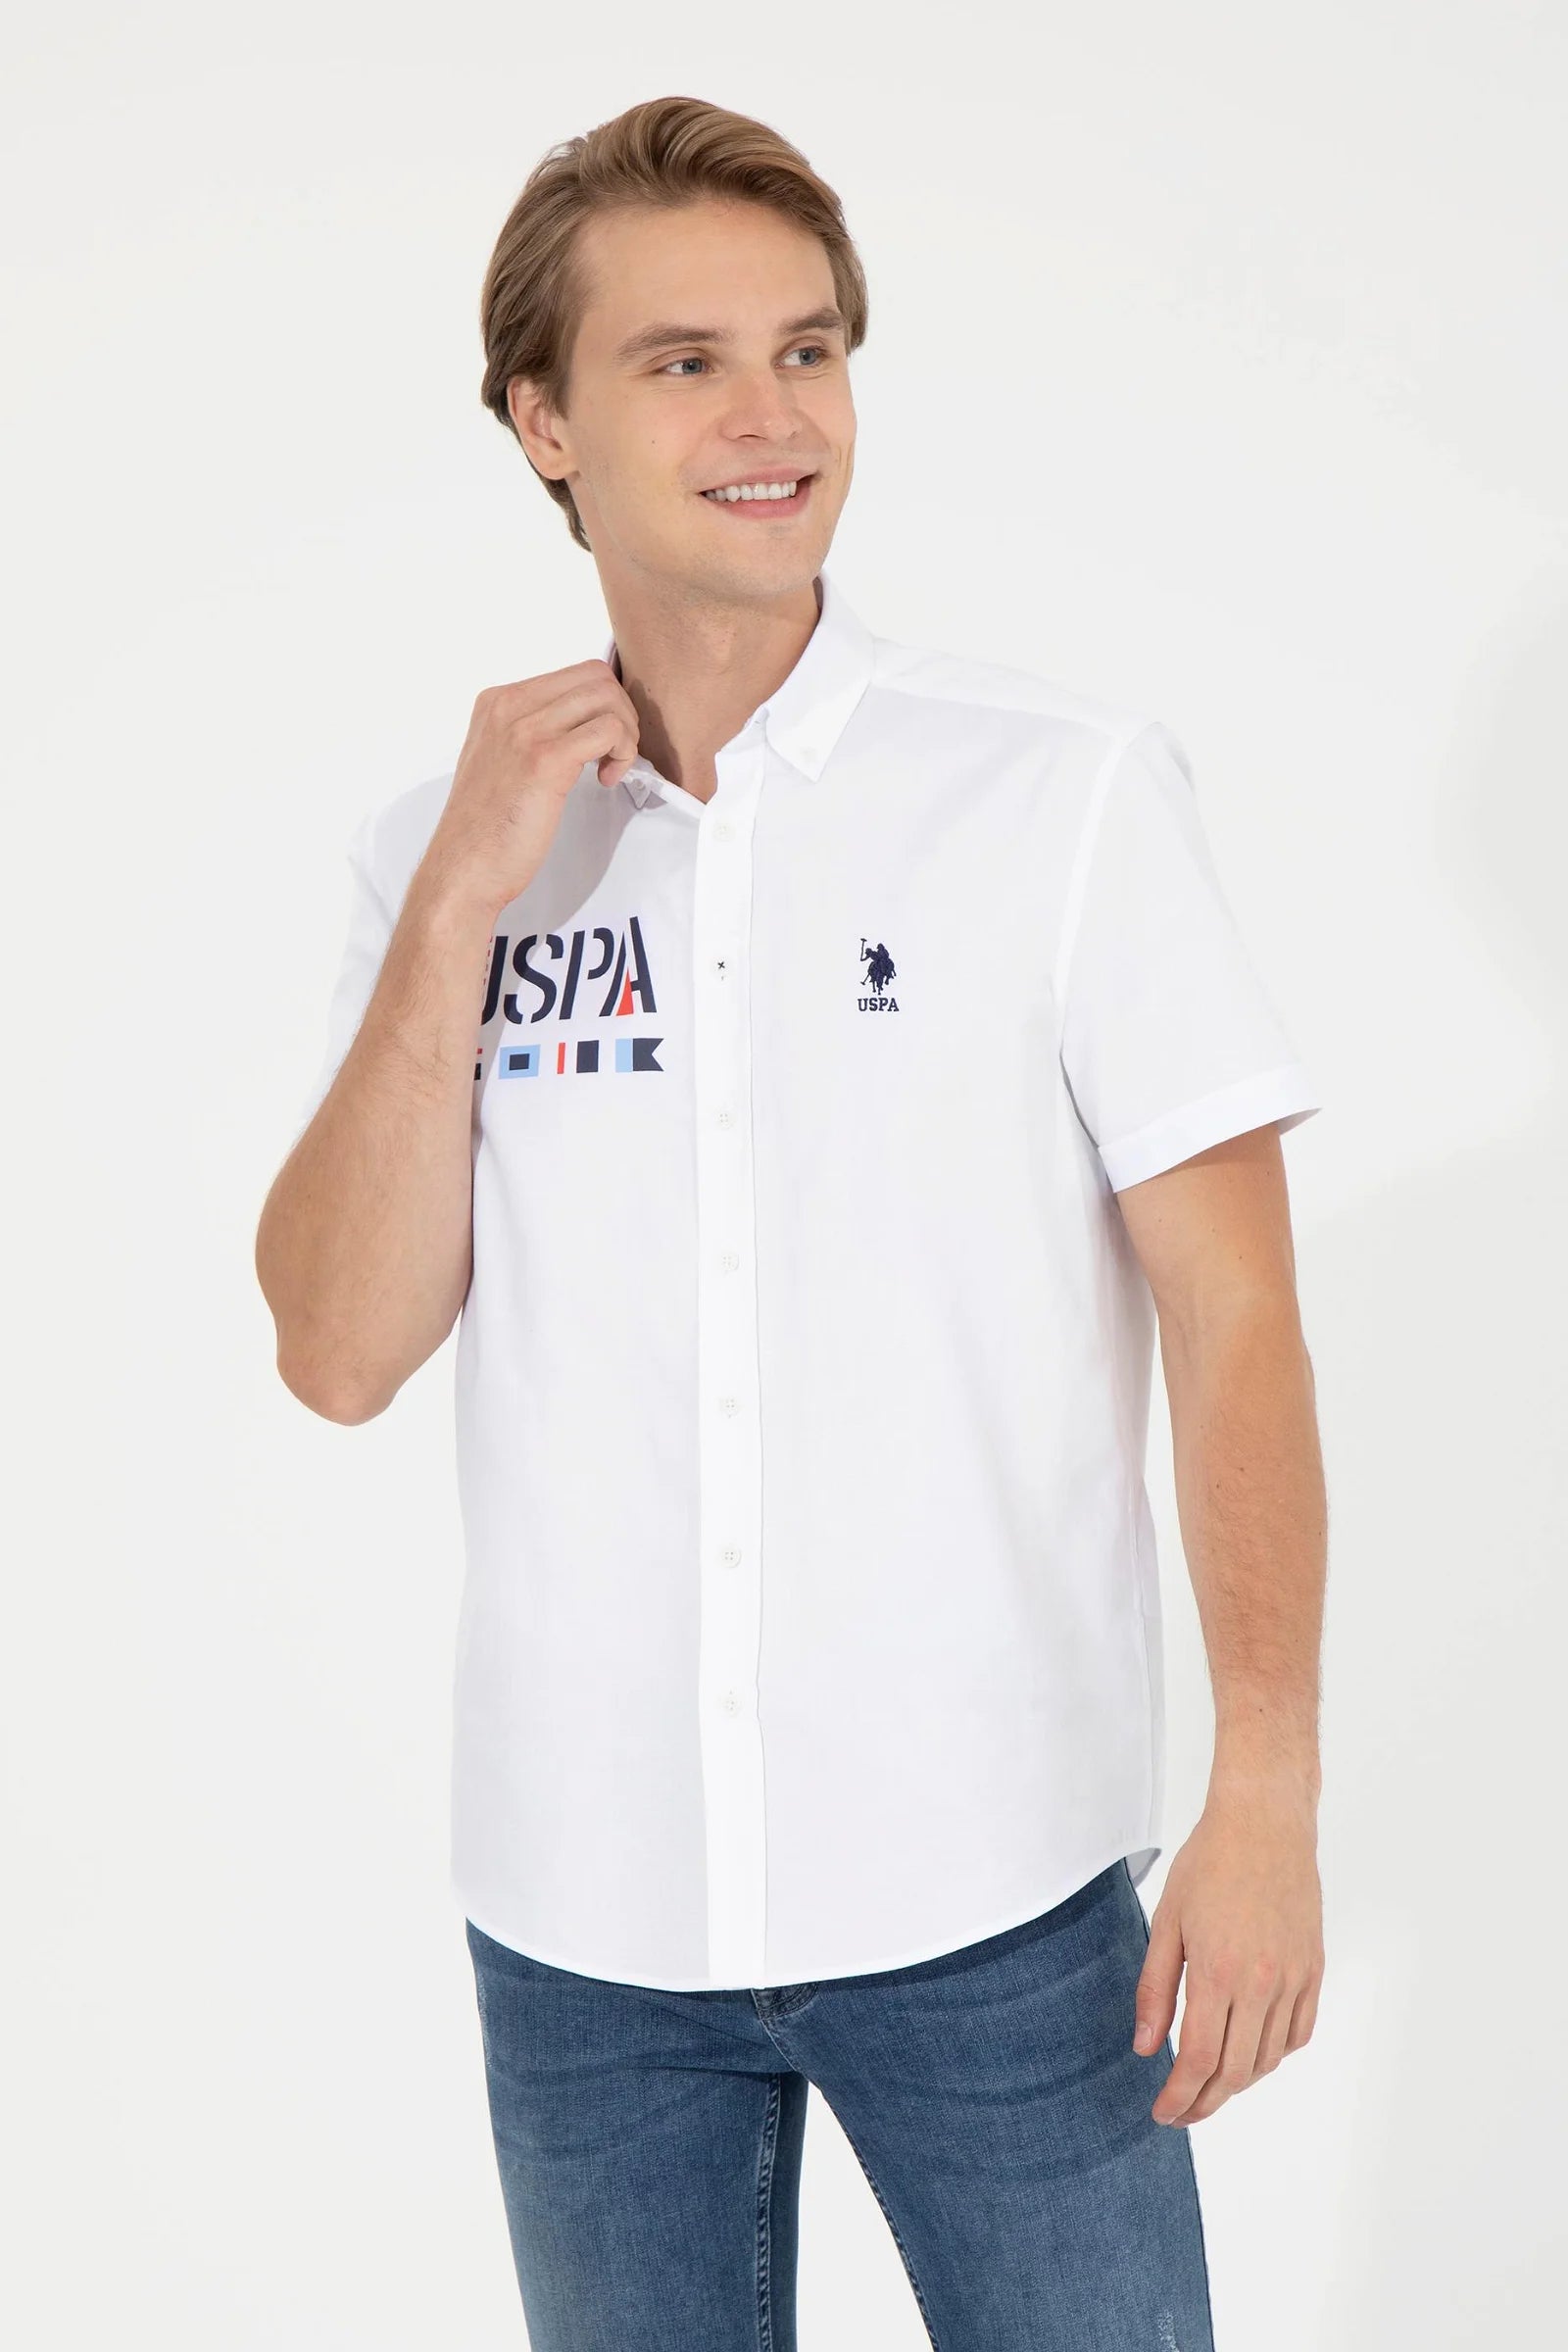 US Polo Assn. Comfort Shirt Short Sleeve Big USPA - Men